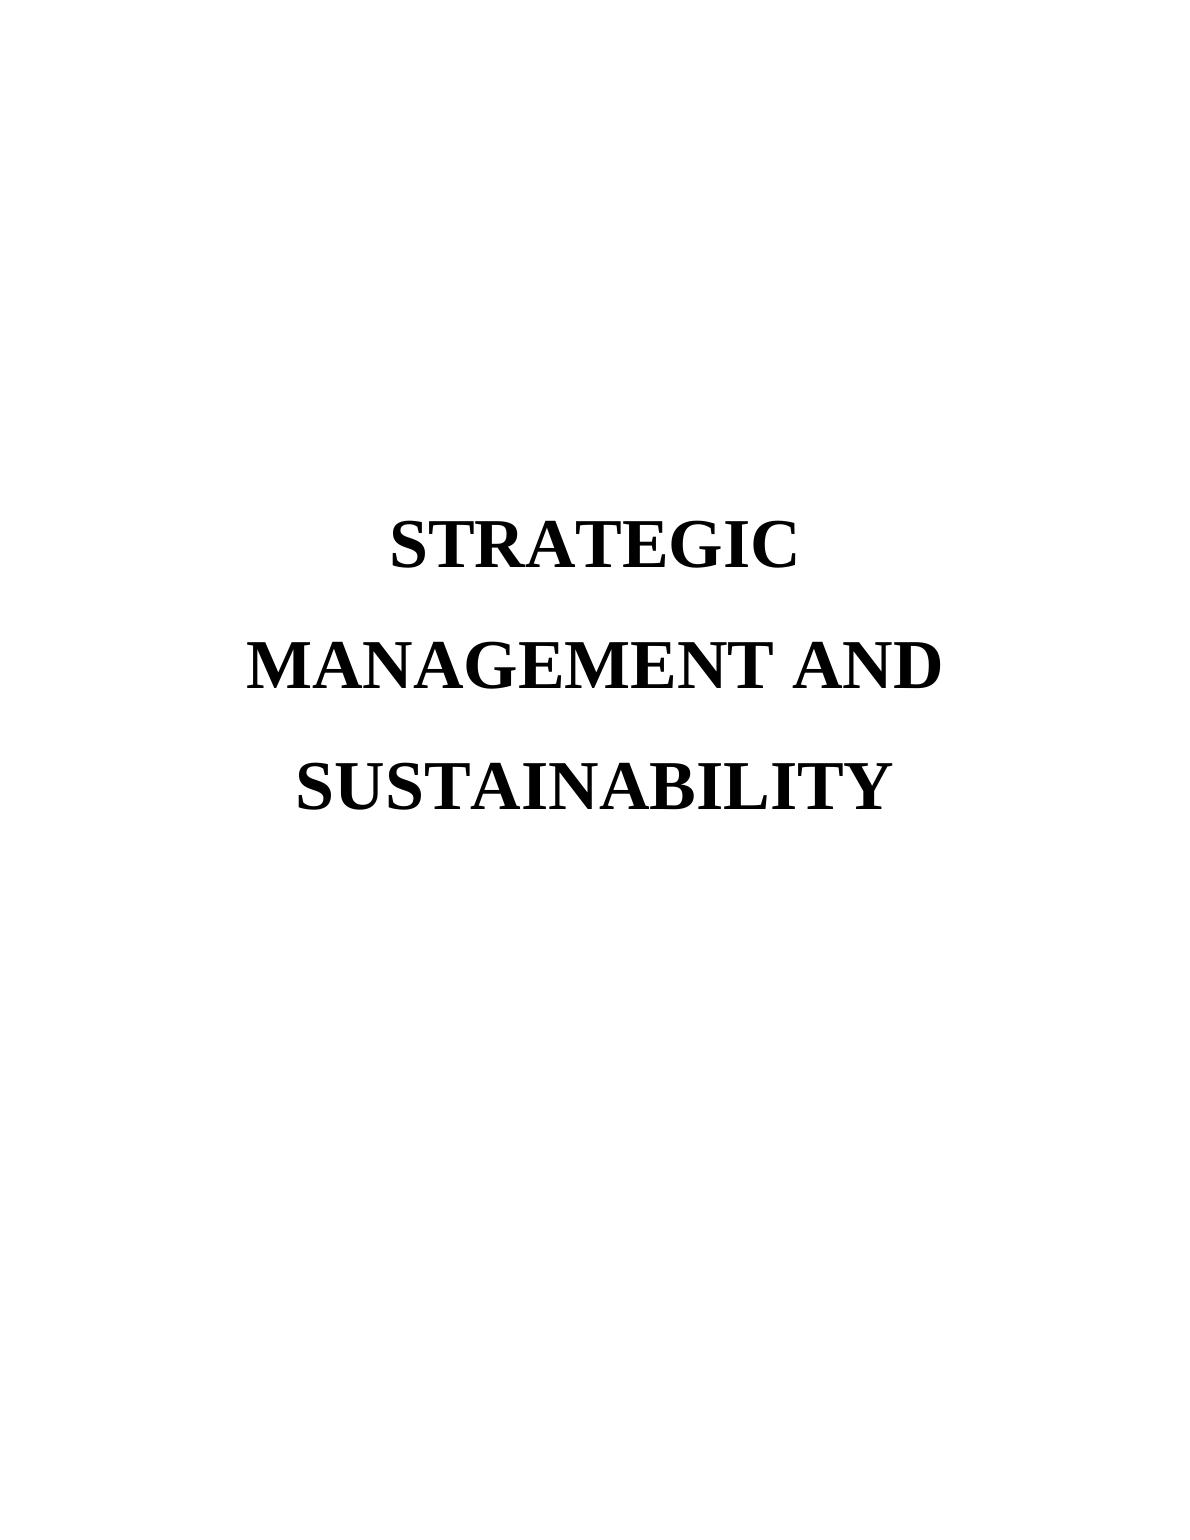 Structure of Strategic Management | Emirates Airline_1